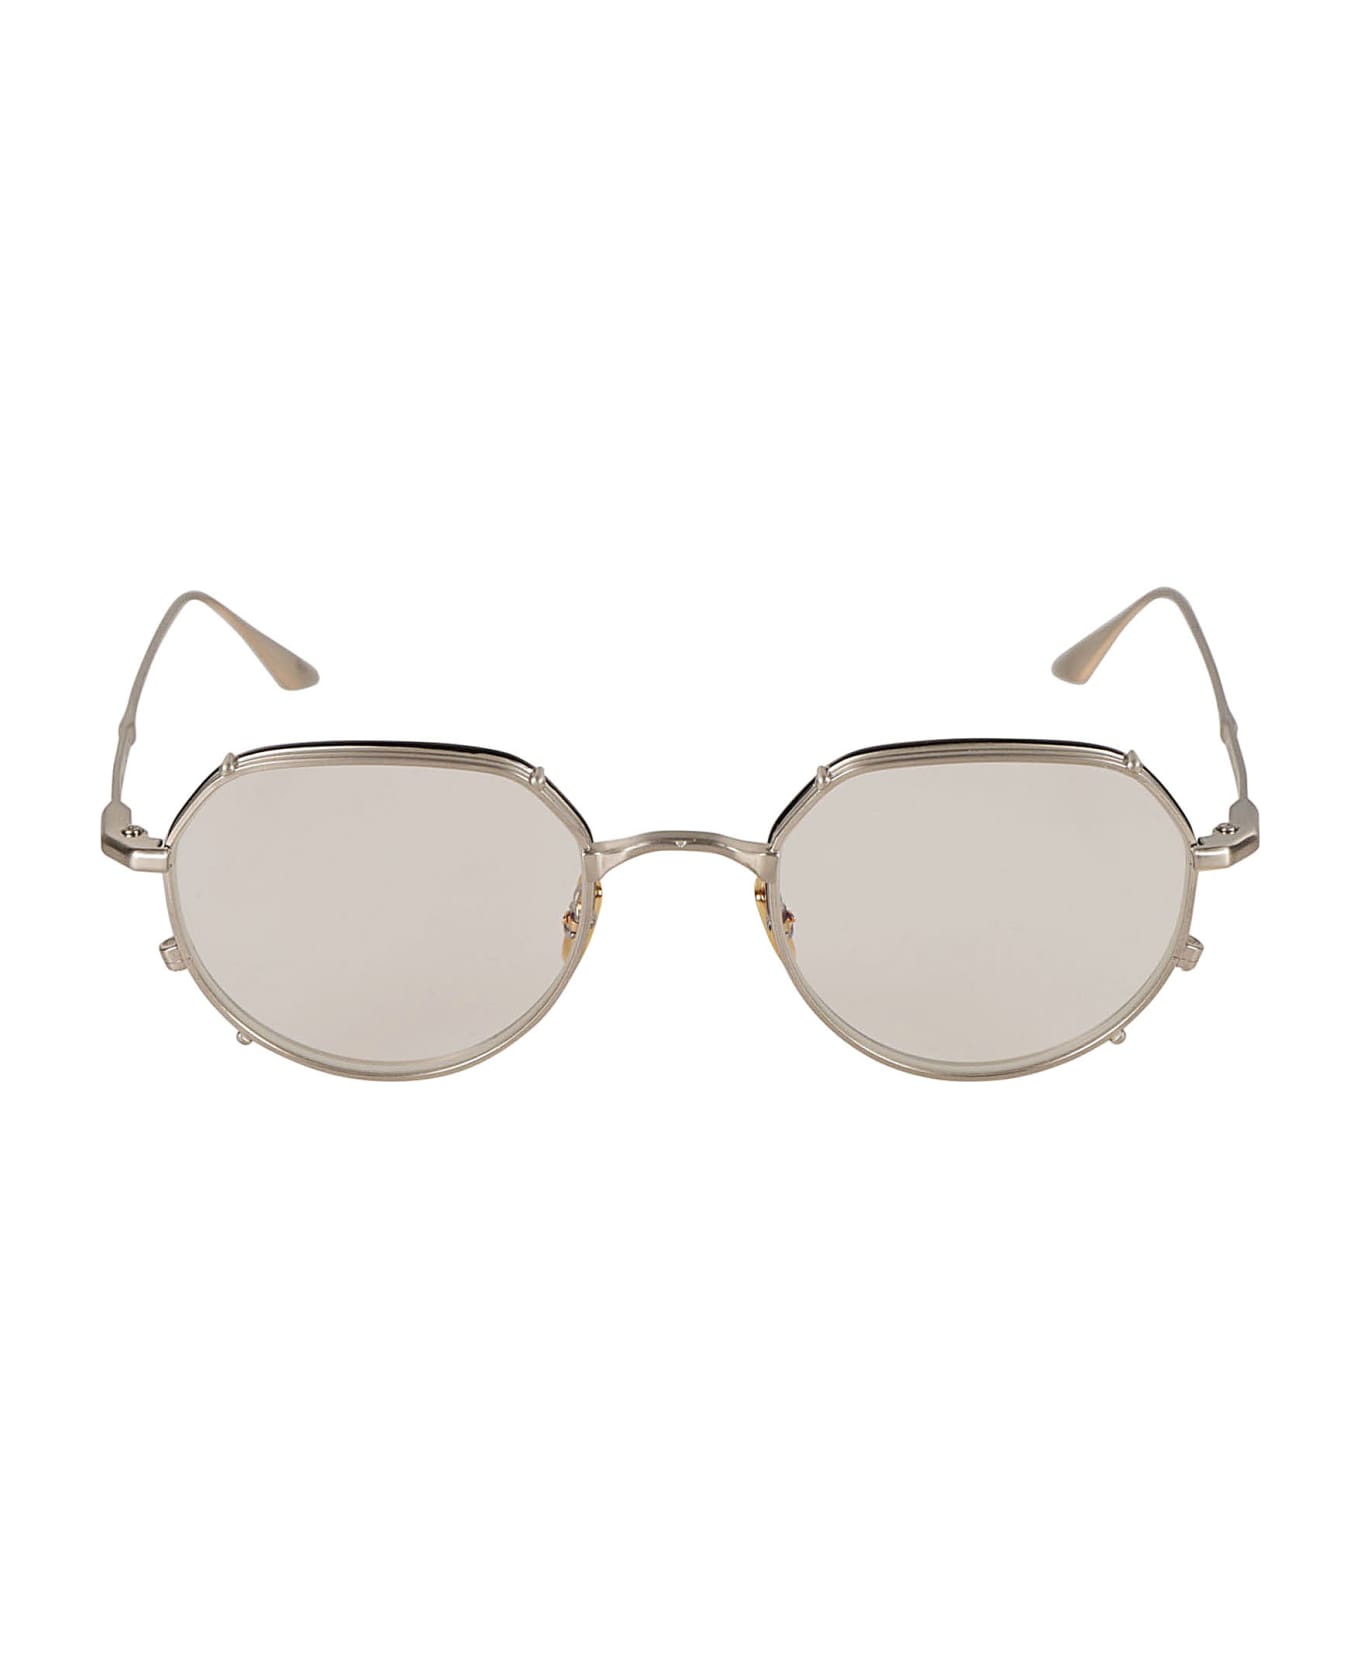 Jacques Marie Mage Hartana Sunglasses Sunglasses - silver